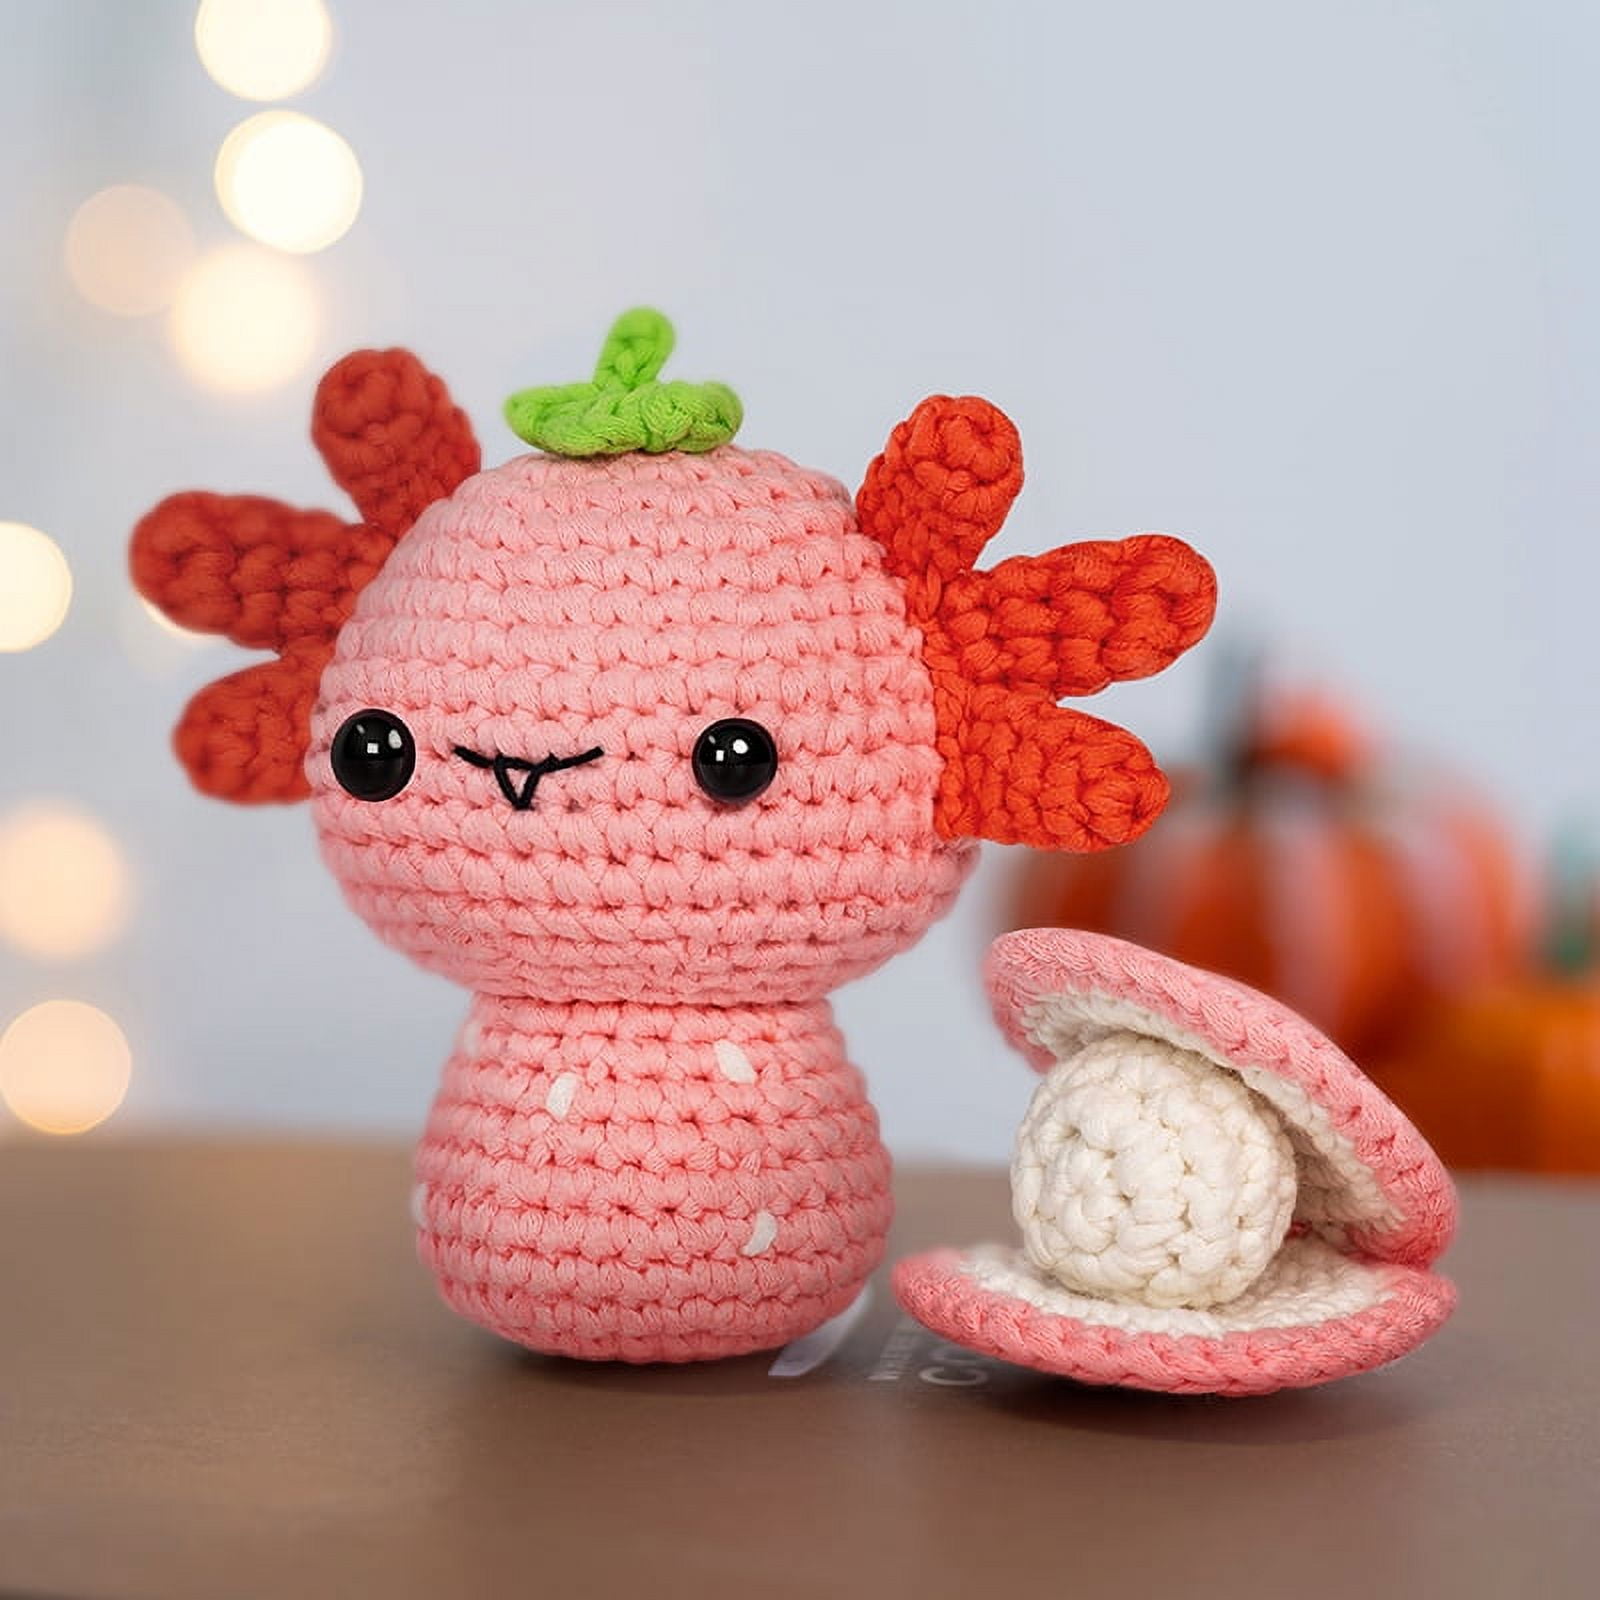 Mewaii® Crochet Original Designed Animal Crochet Kit for Beginners with  Easy Peasy Yarn